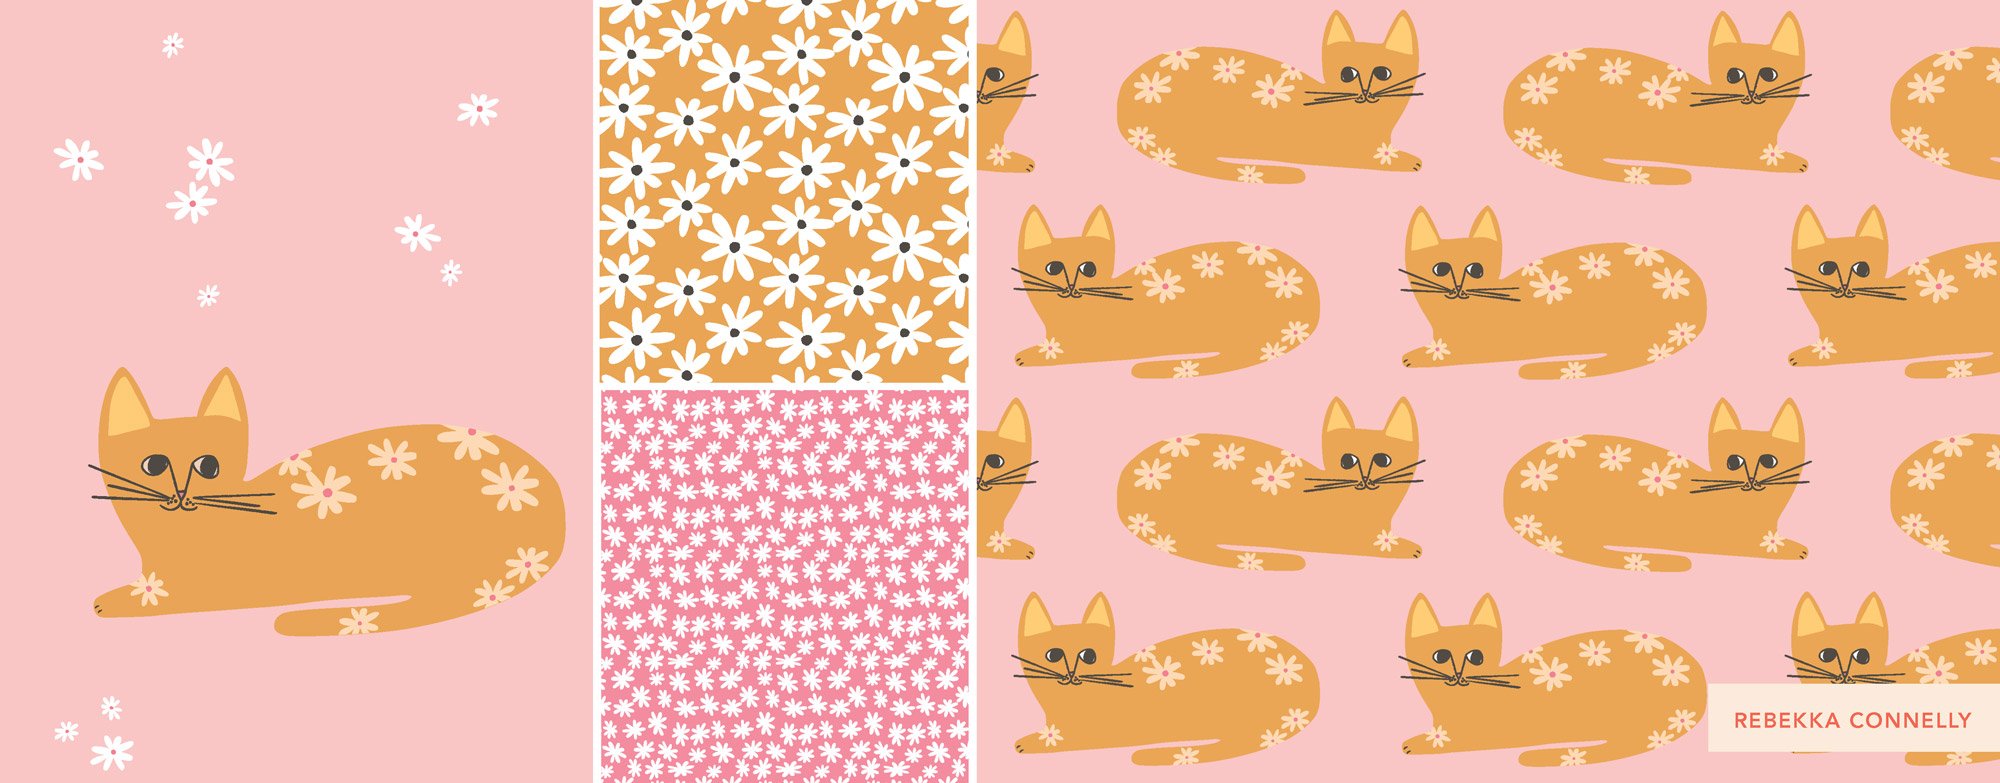 Rebekka-connelly-pattern-designer-modern-cat-fabric-pink.jpg